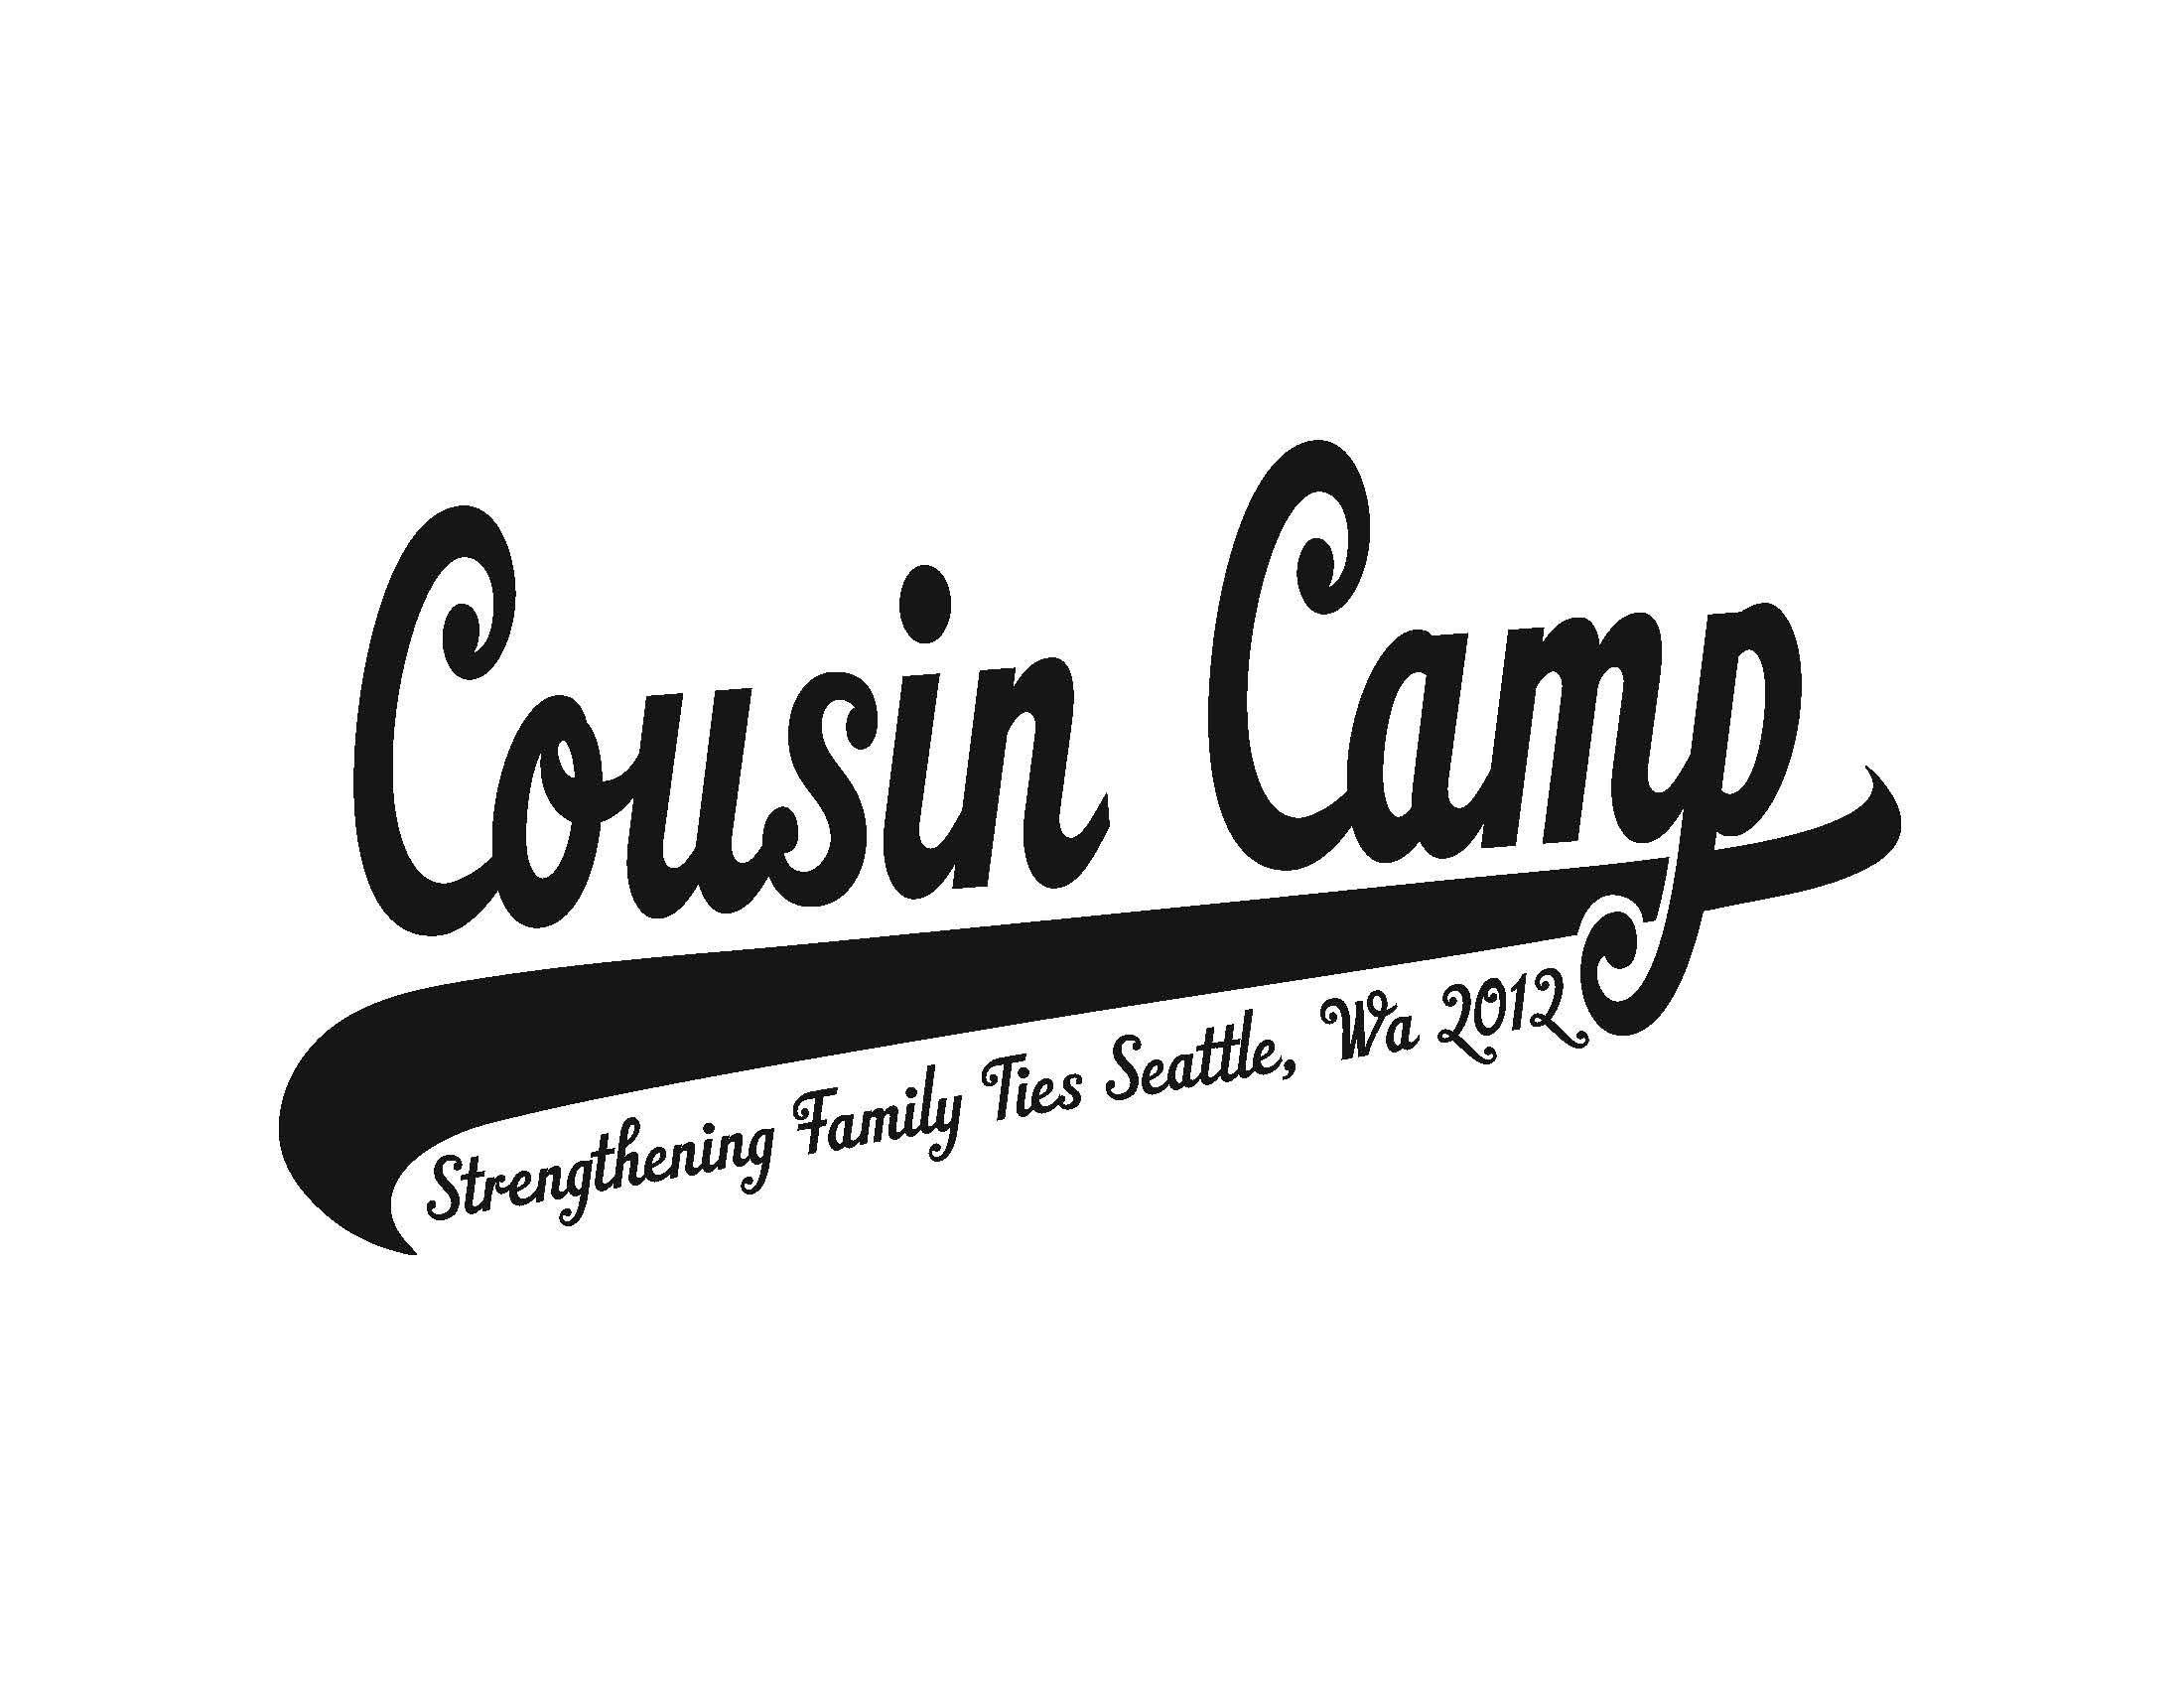 Fun Camp Logo - Cousin Camp Logo | Flyers/Artwork/Layouts | Pinterest | Camping ...